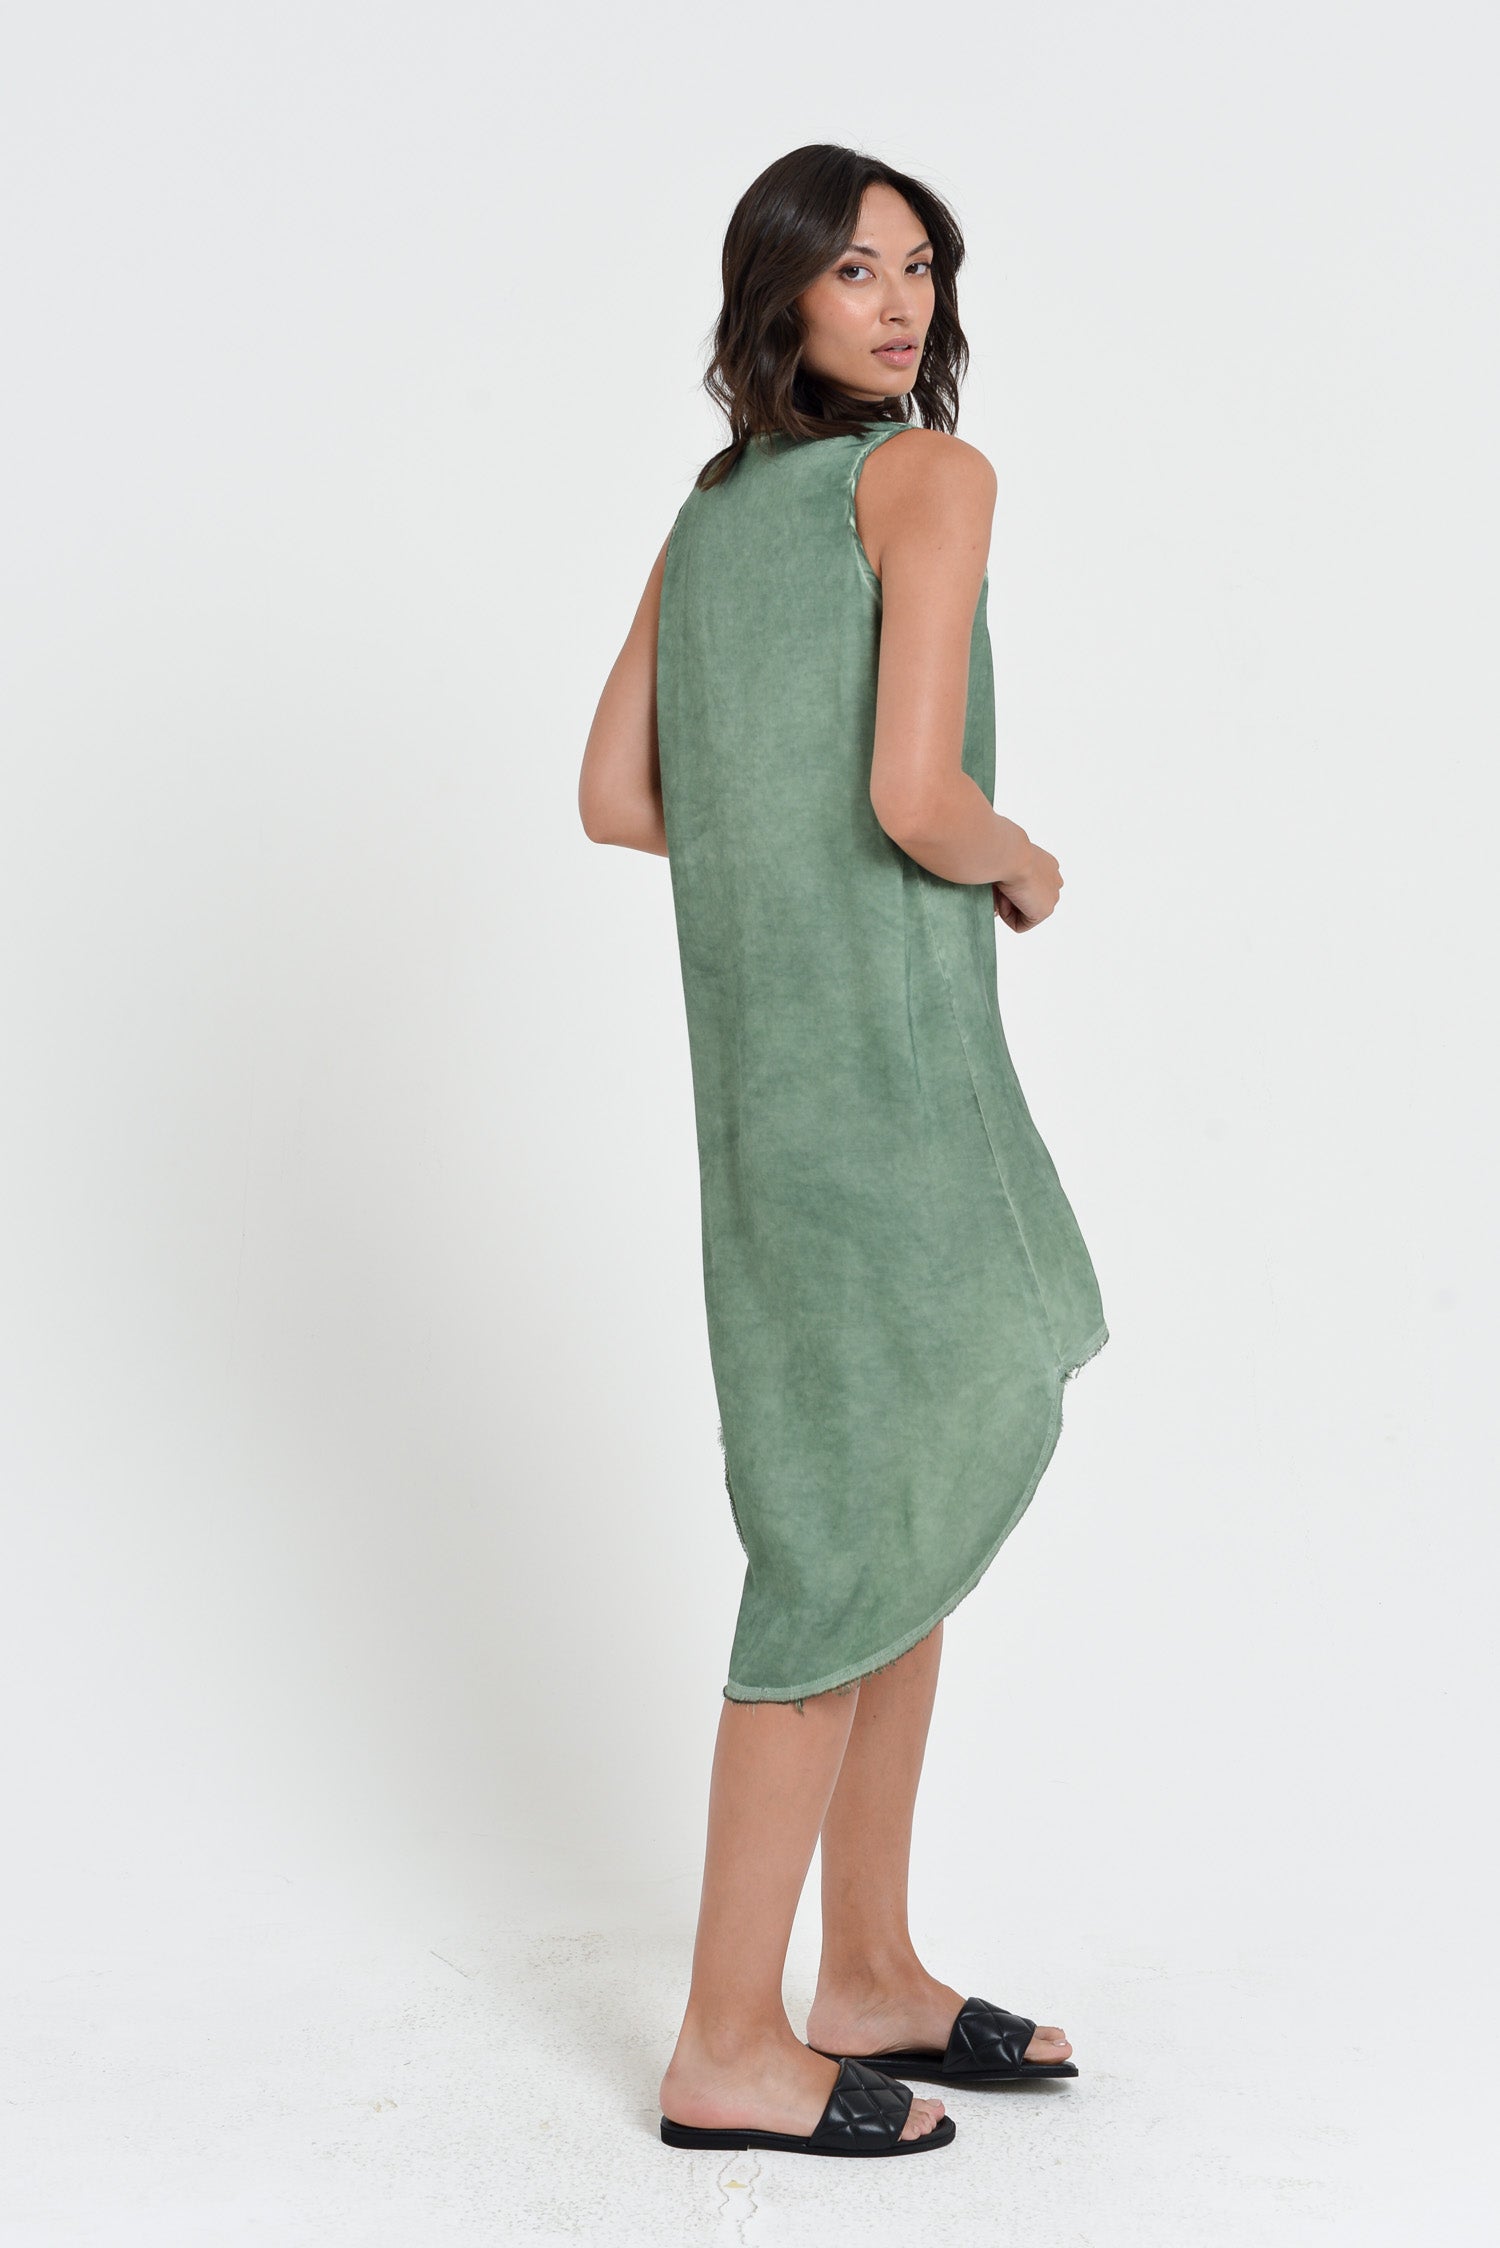 Tulip Dress - Women's Sleeveless Long Back Satin Dress - Juniper